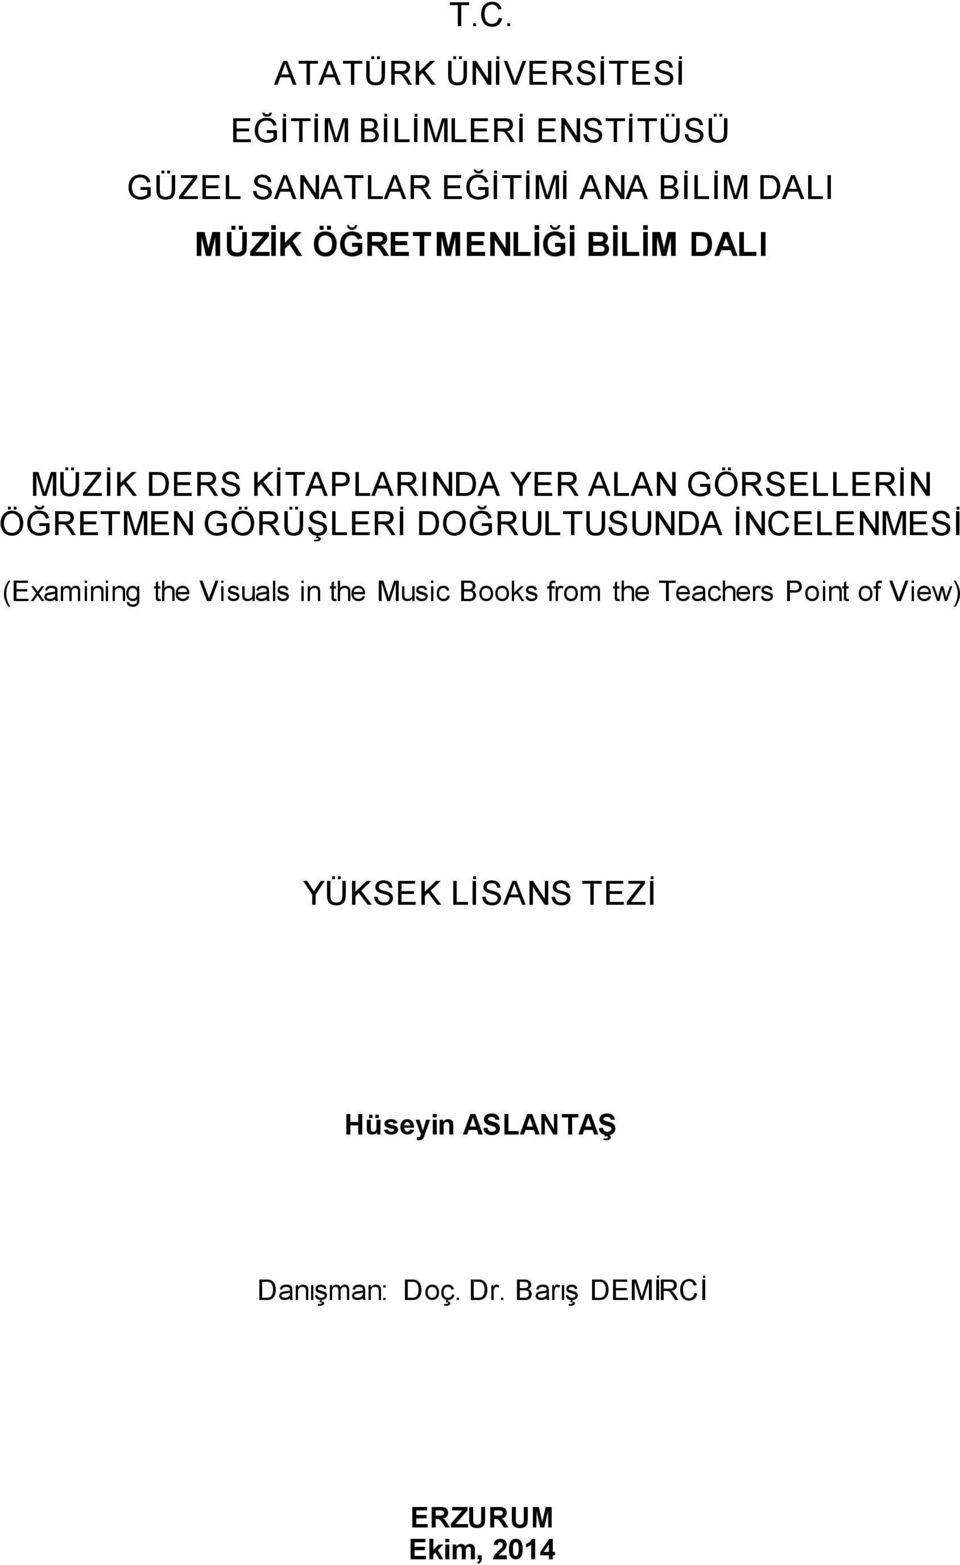 DOĞRULTUSUNDA İNCELENMESİ (Examining the Visuals in the Music Books from the Teachers Point